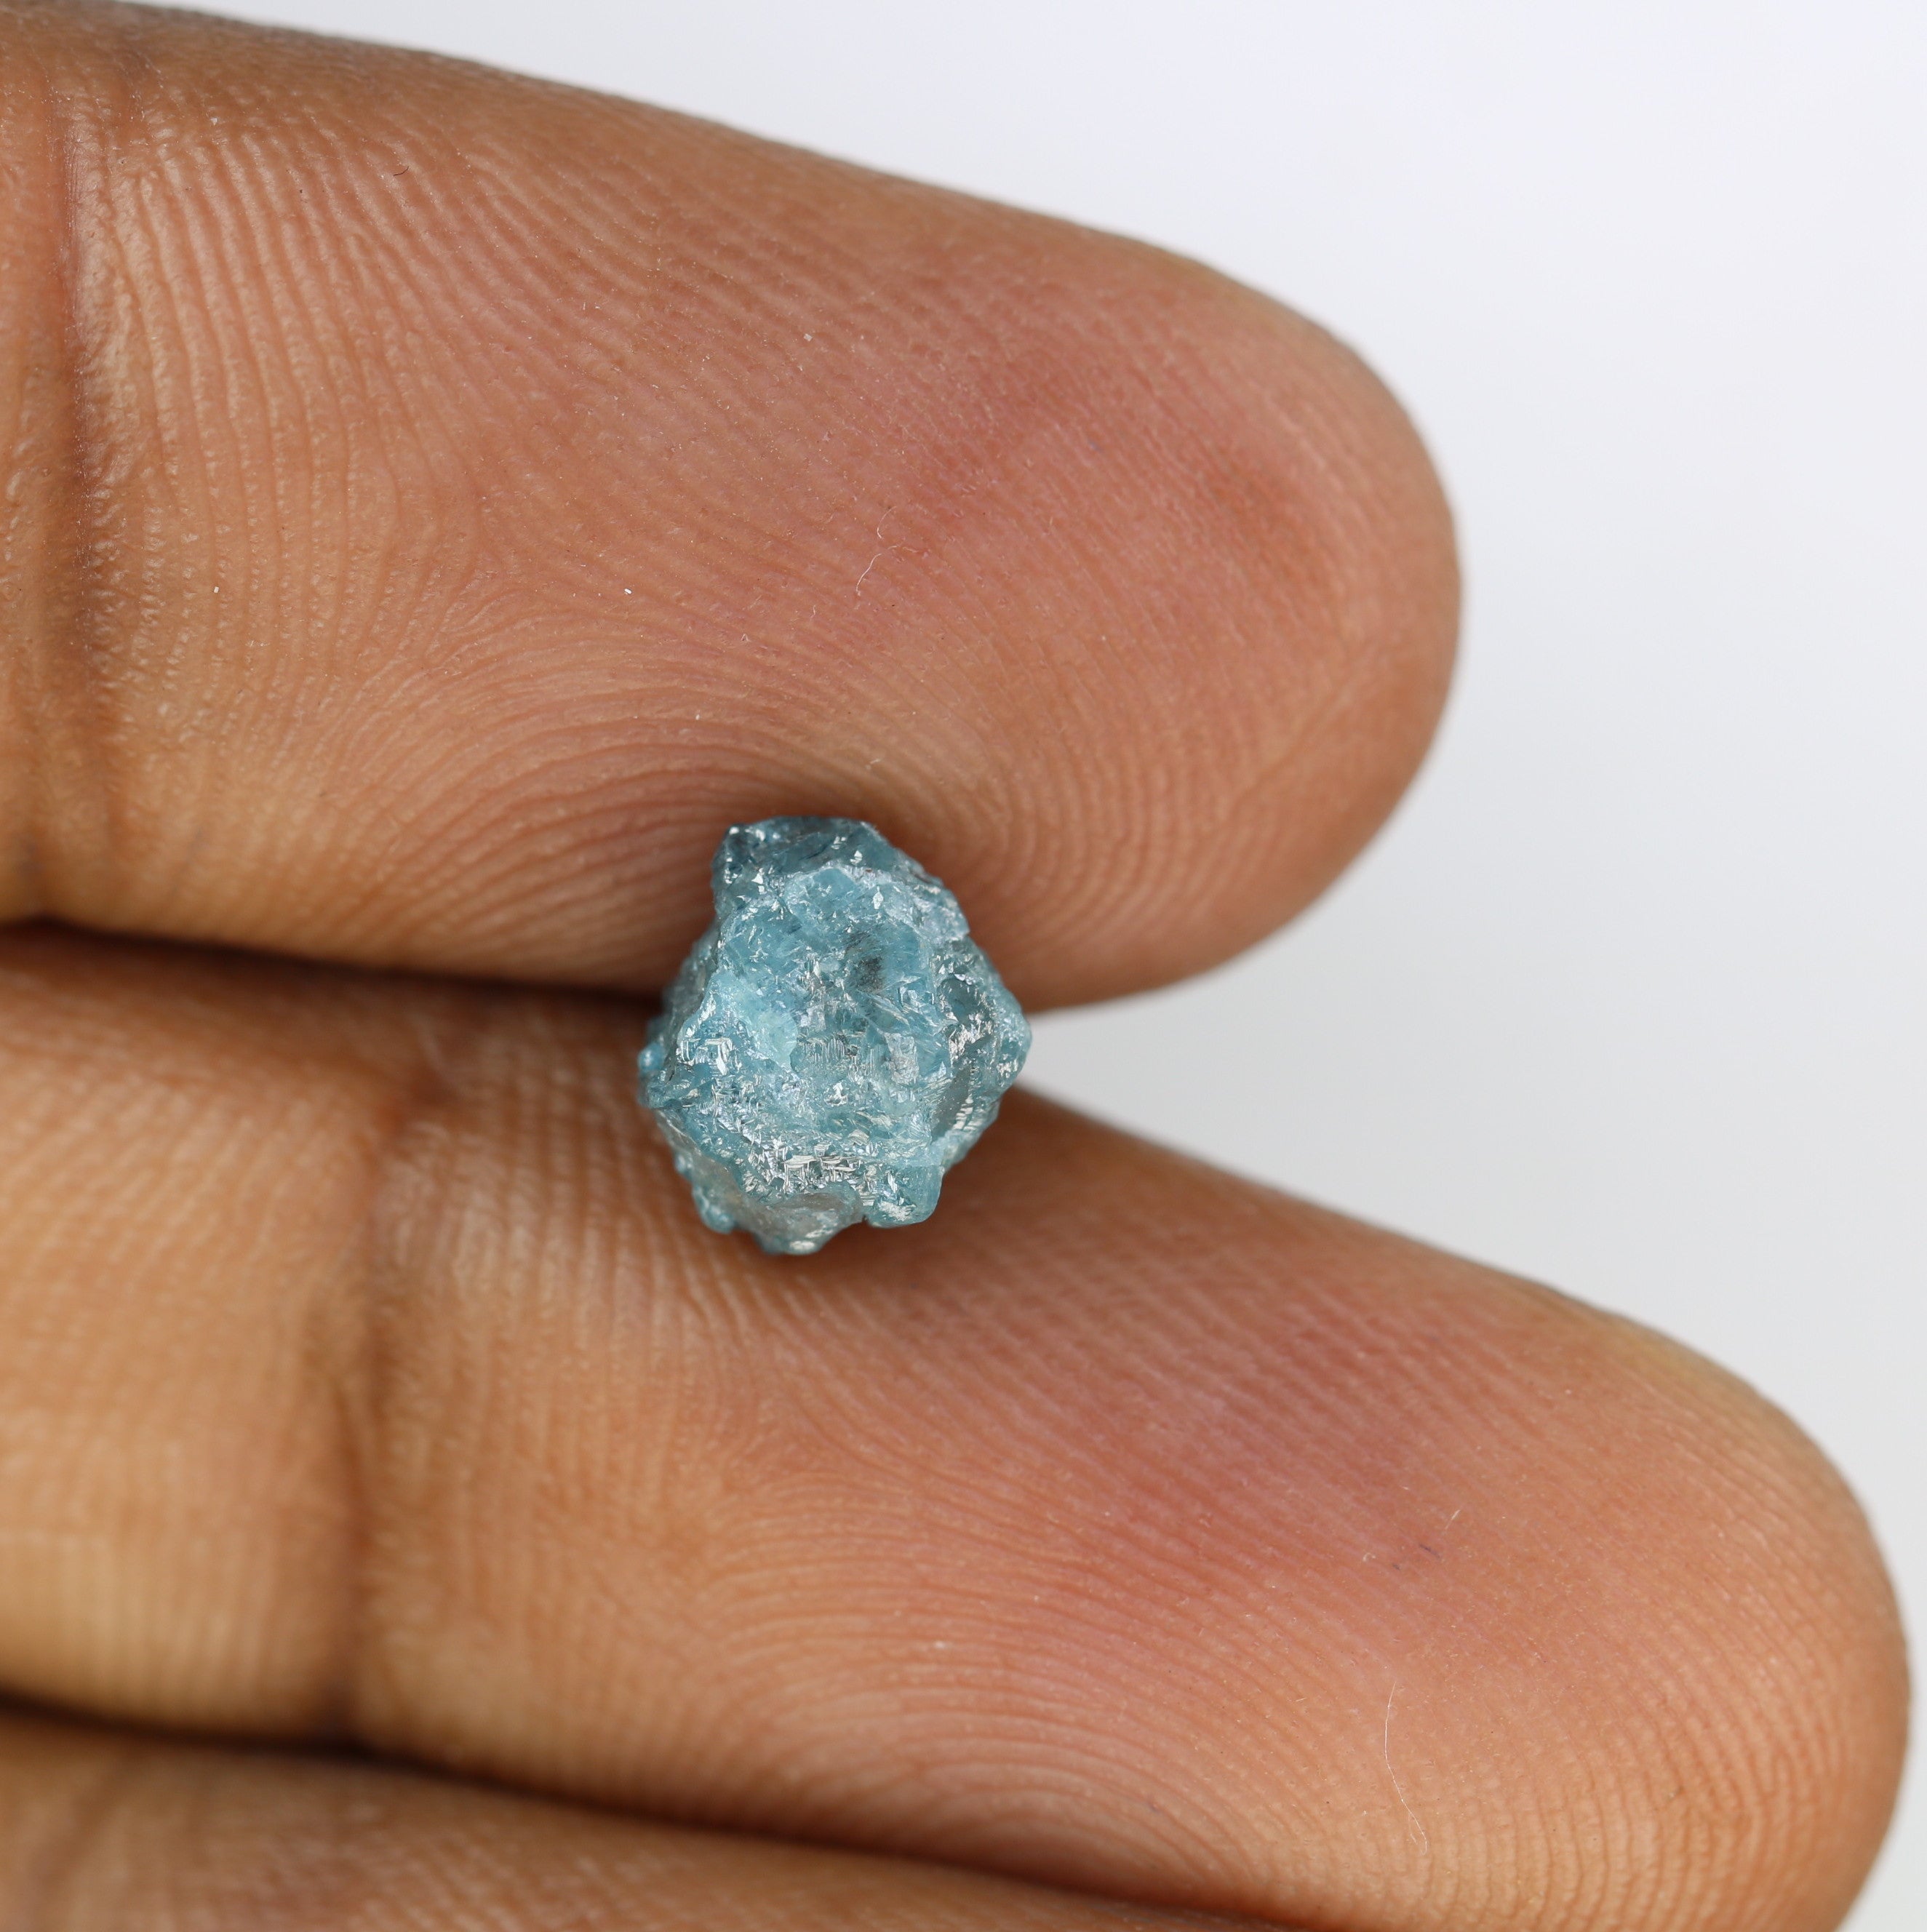 2.92 CT Rough Raw Irregular Cut Blue Diamond For Engagement Ring